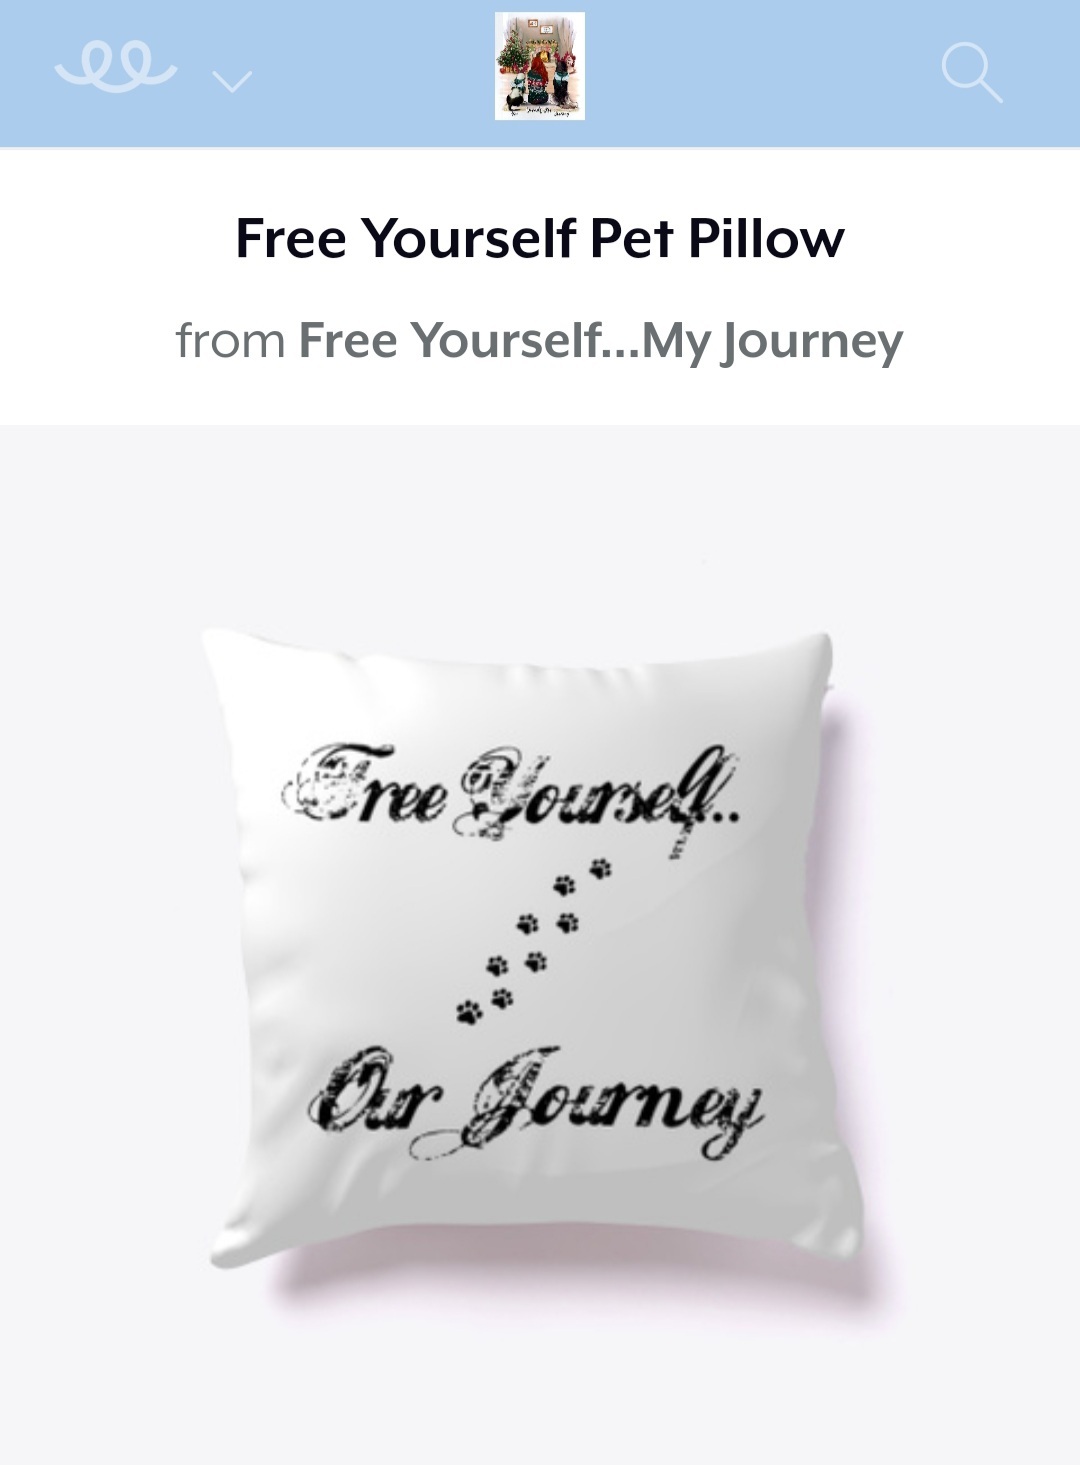 Free_Yourself_Clothing_Premium_Pet_Pillow_6oojr.jpg